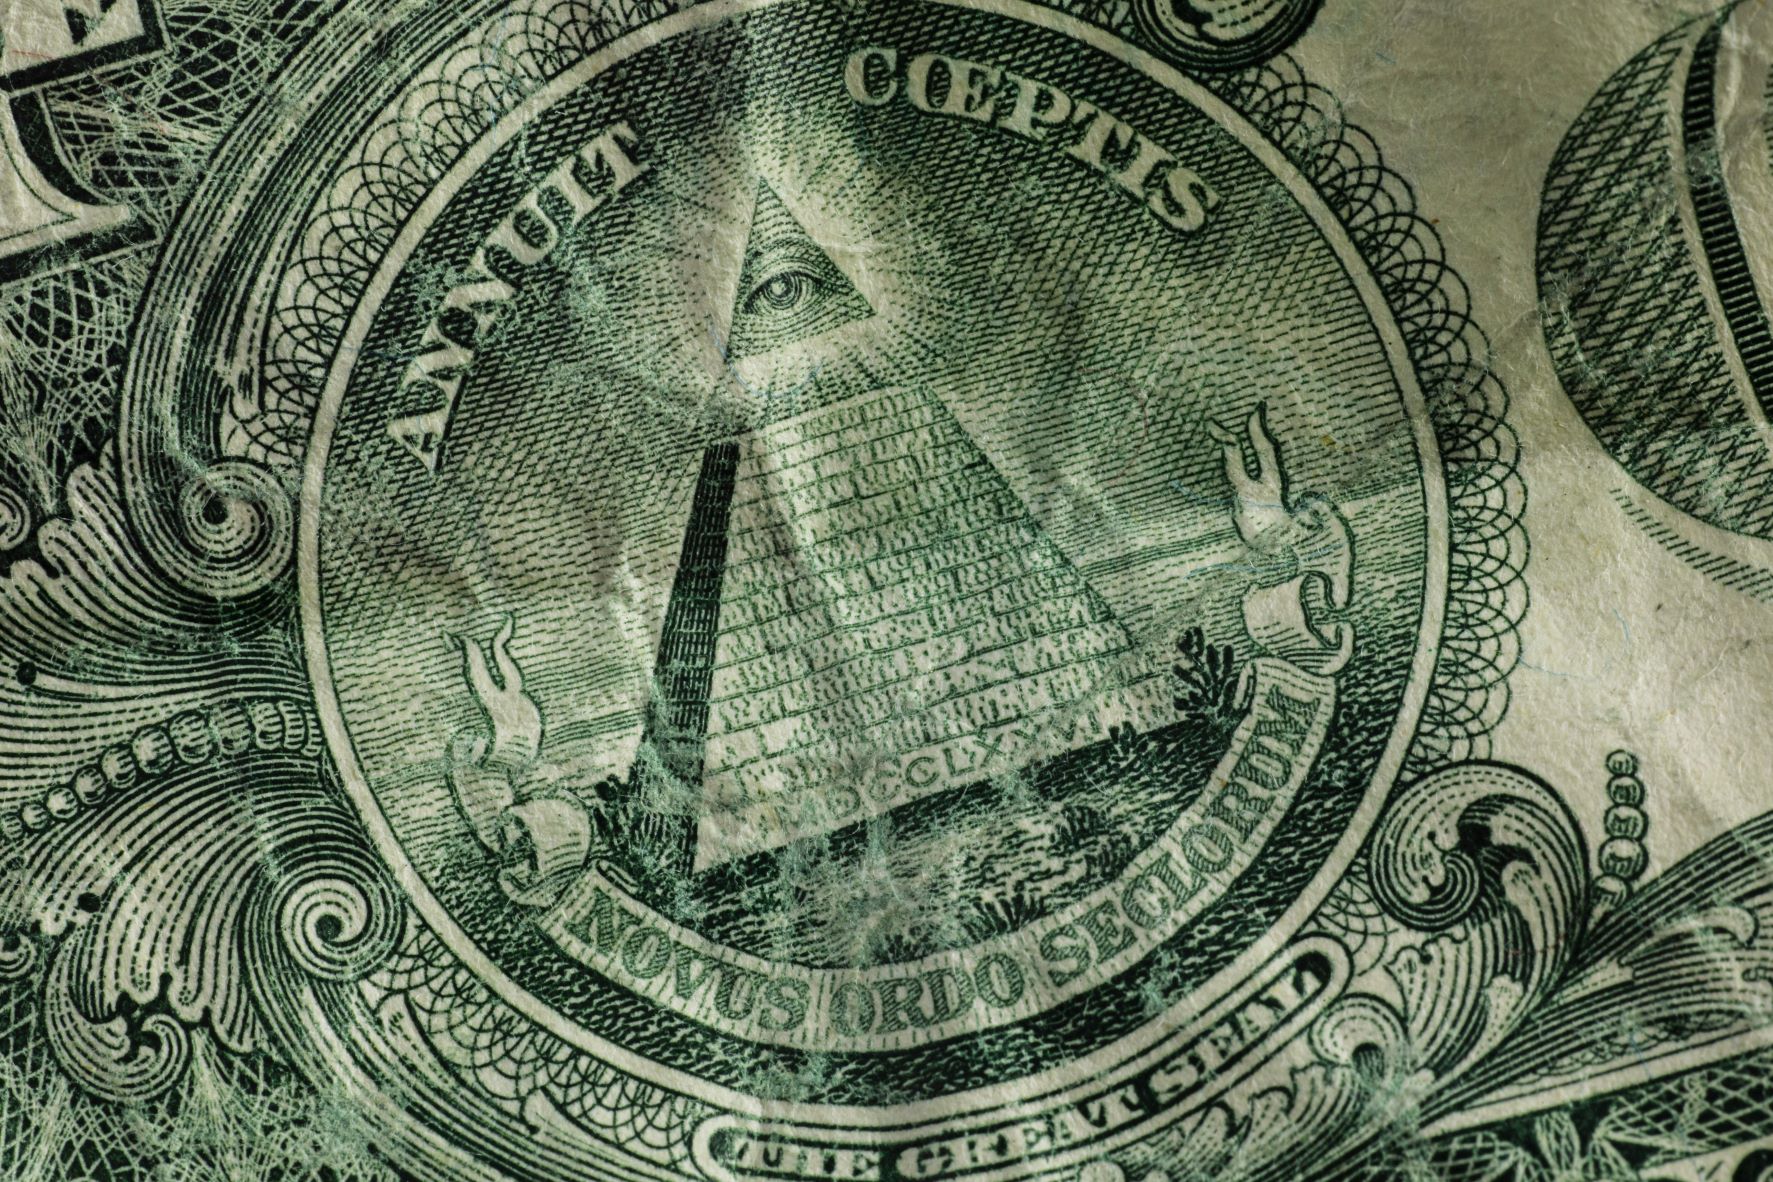 A close up photograph of a dollar bill